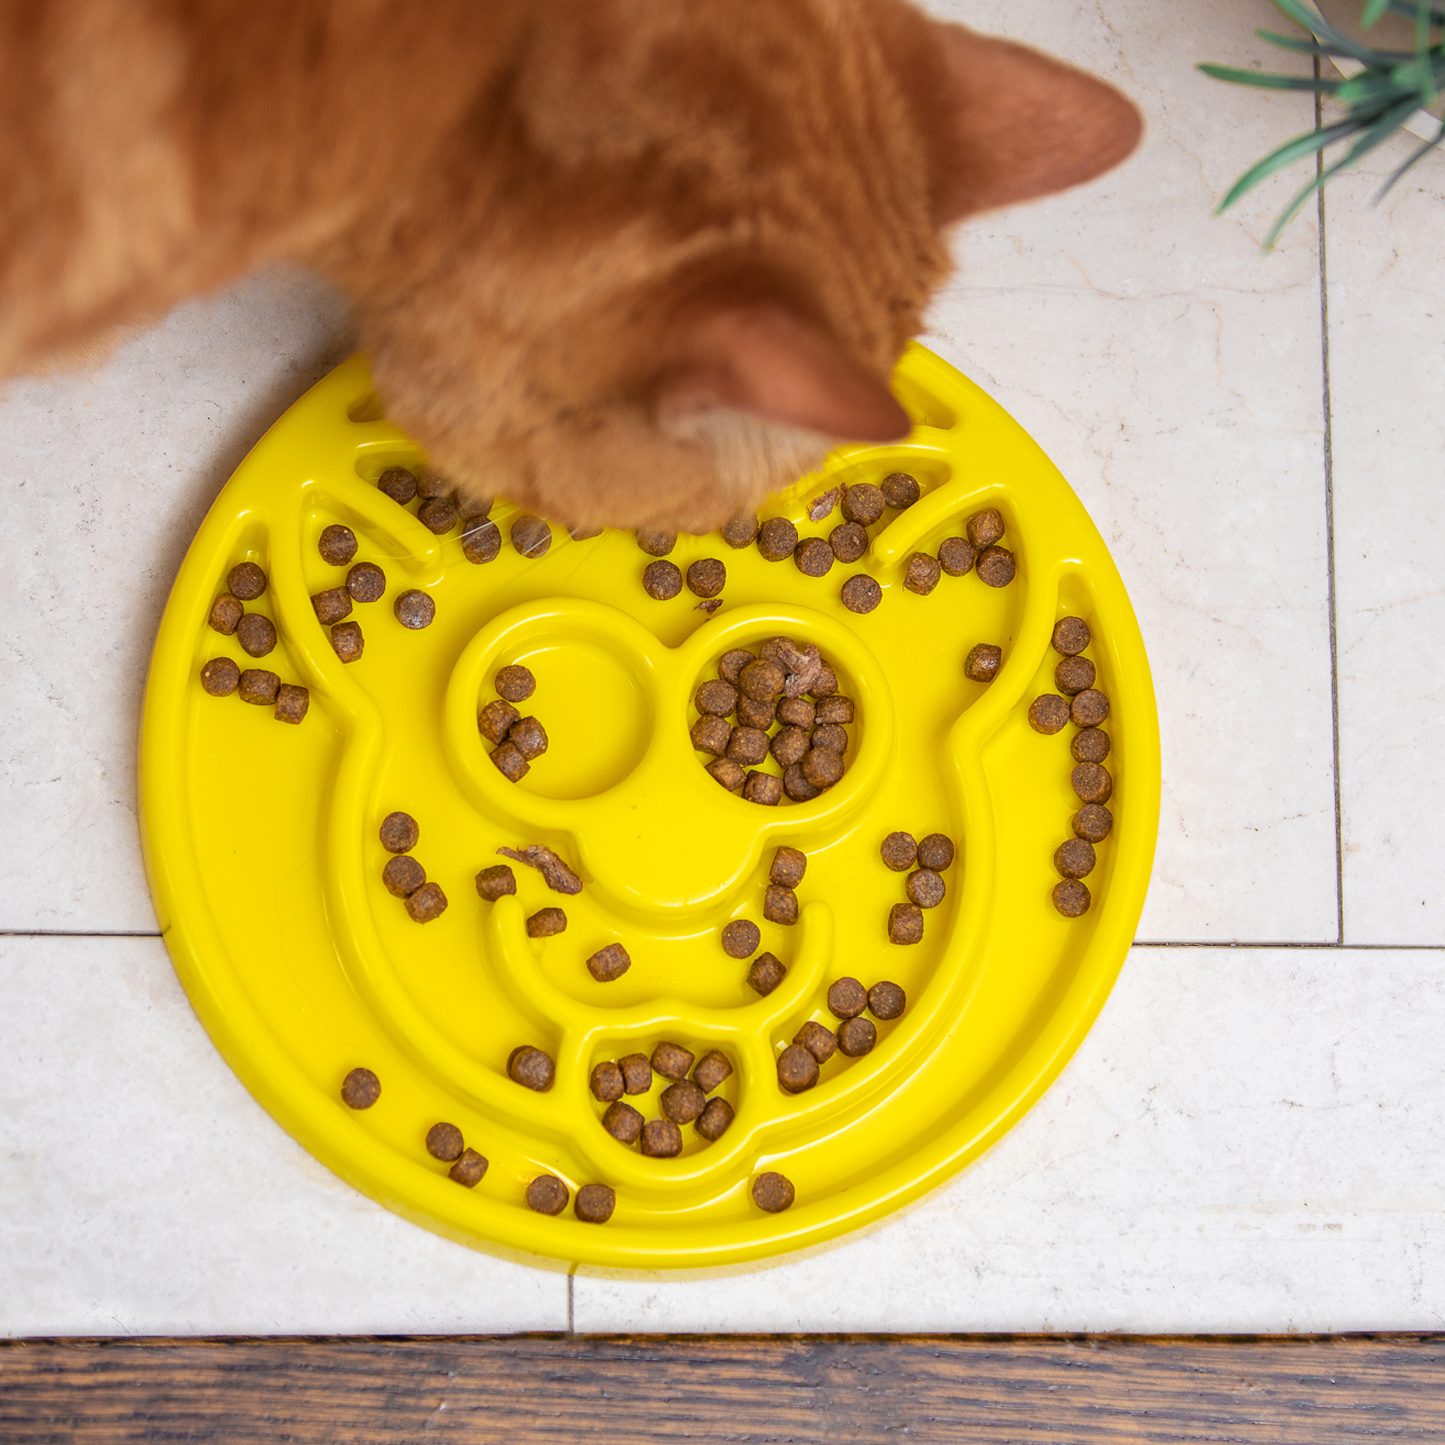 Interactive slow feeder bowl for cat, beginner level